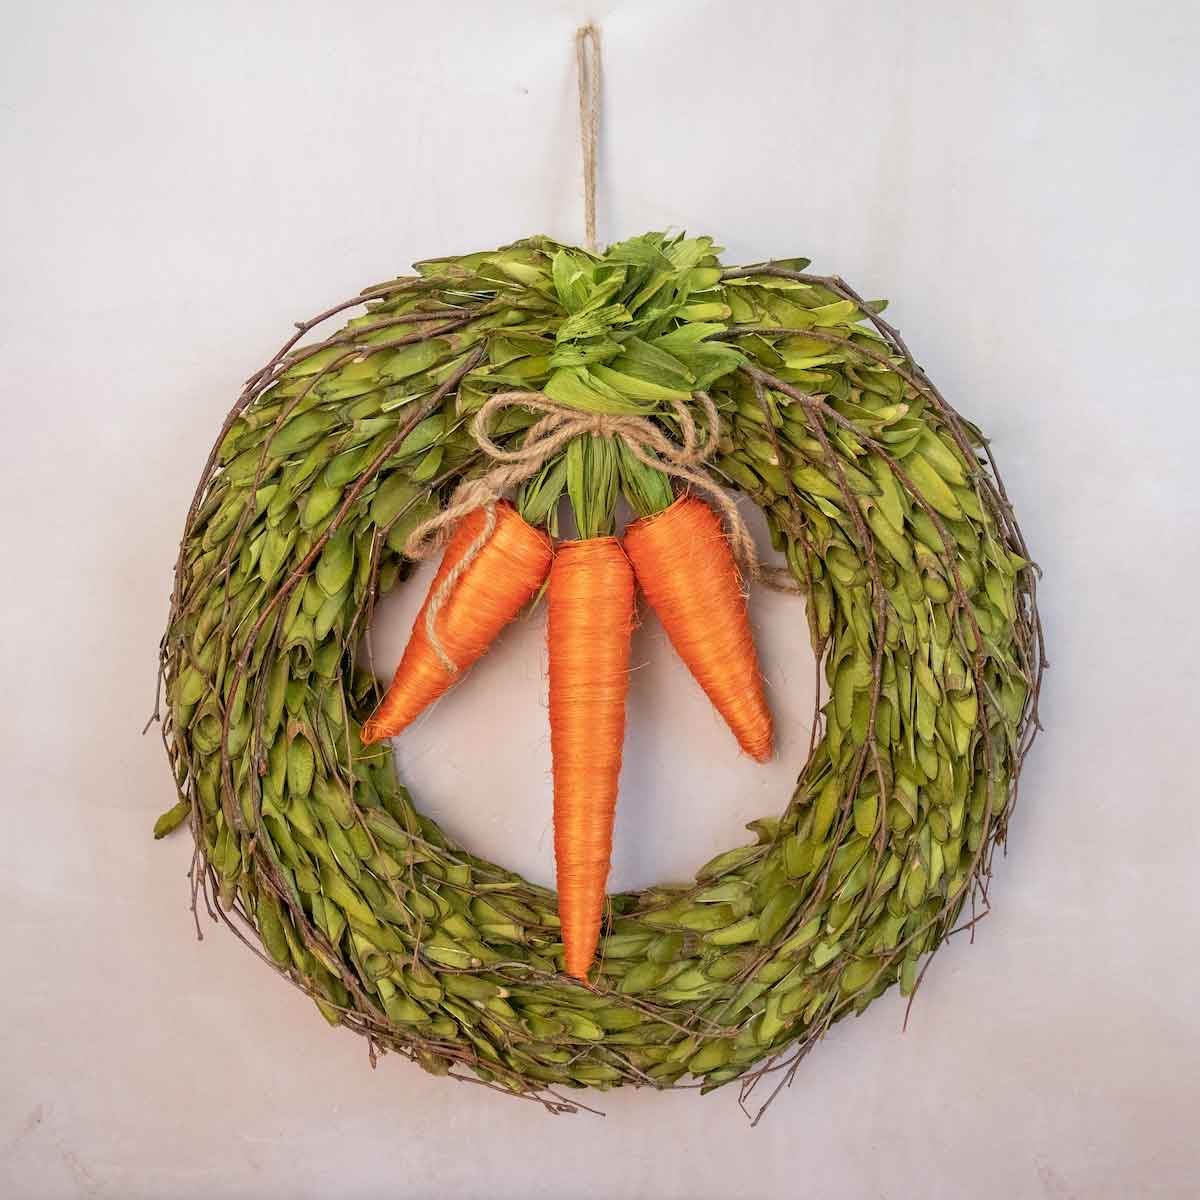 Season and Stir™ Bakersfield Carrot Wreath